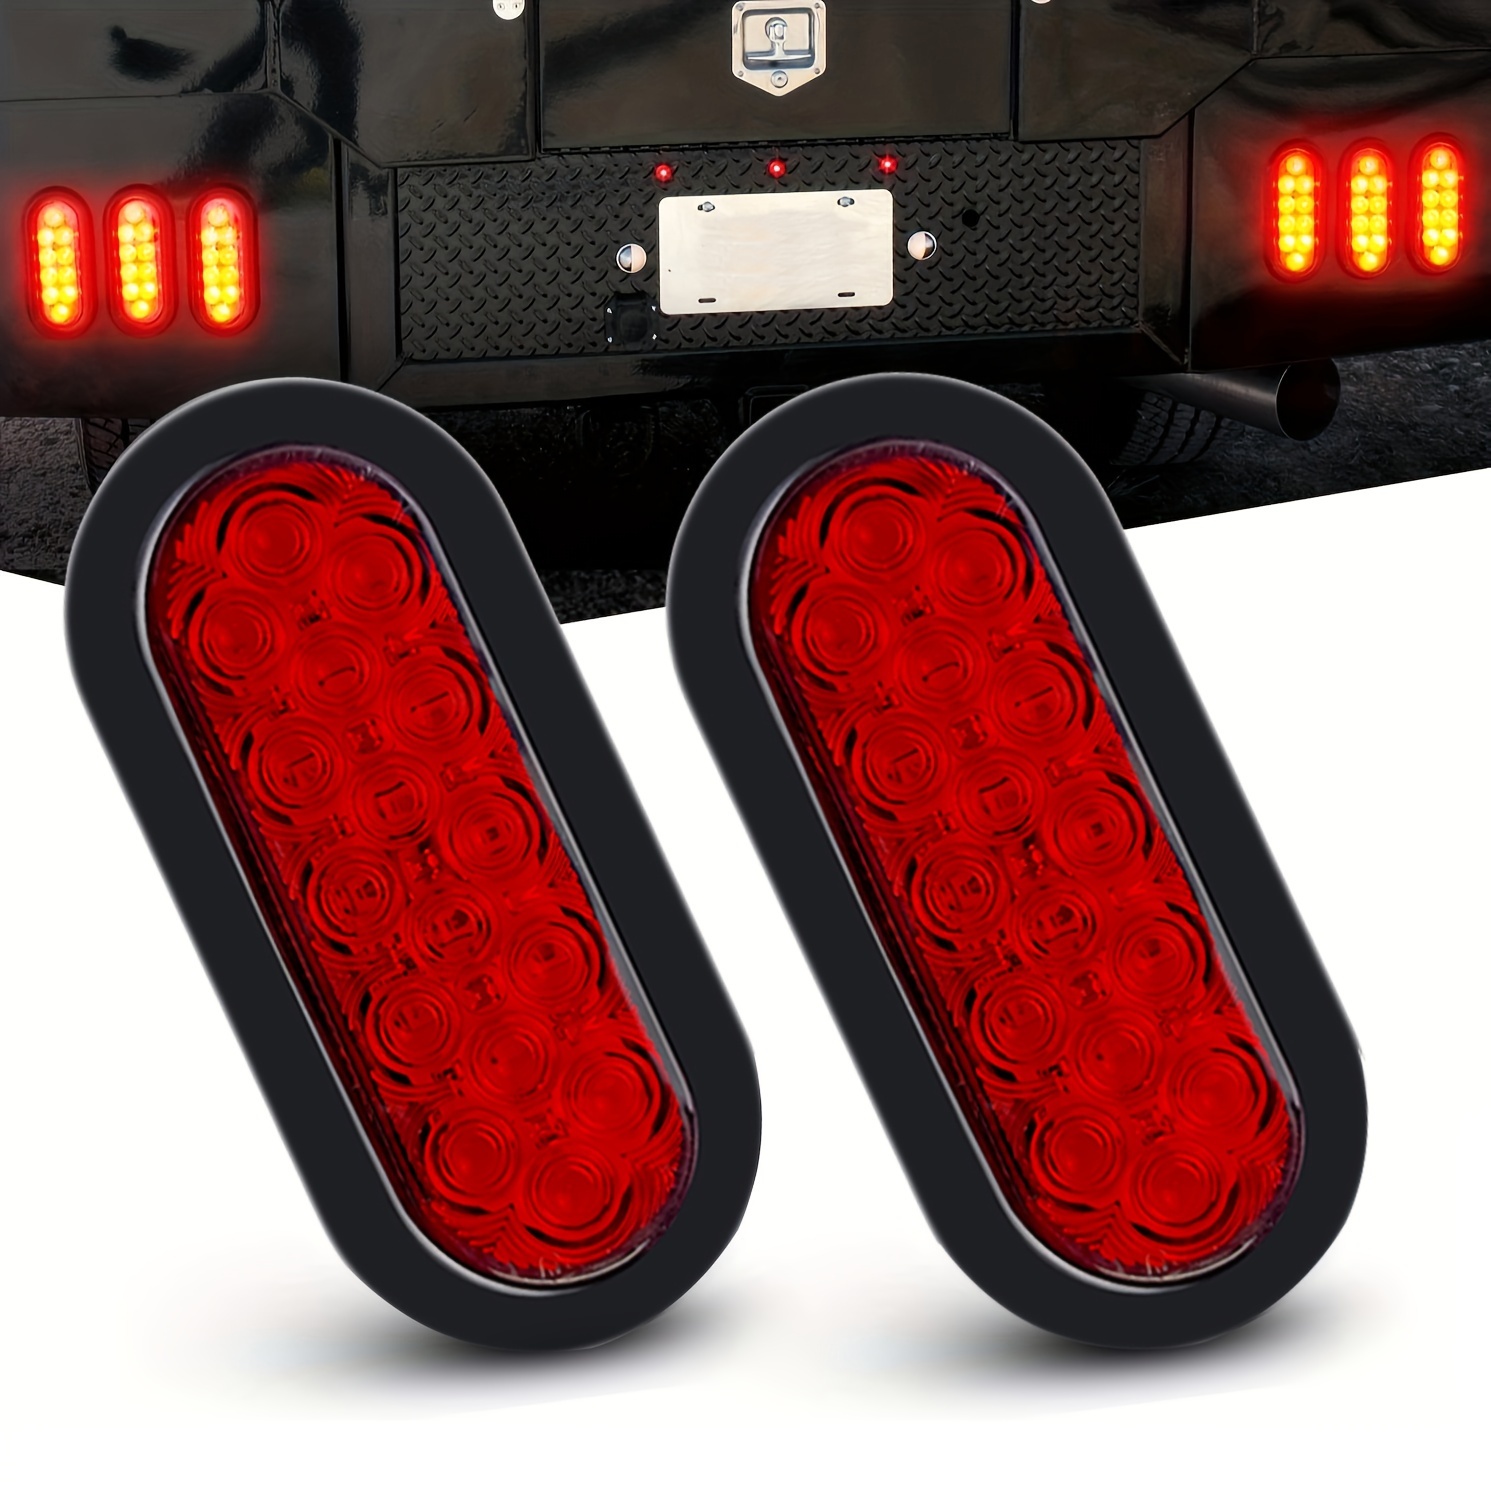 Luces de marcador laterales redondas rojas de 2 pulgadas para remolque,  luces LED con ojales de montaje para automóviles, camiones, remolques